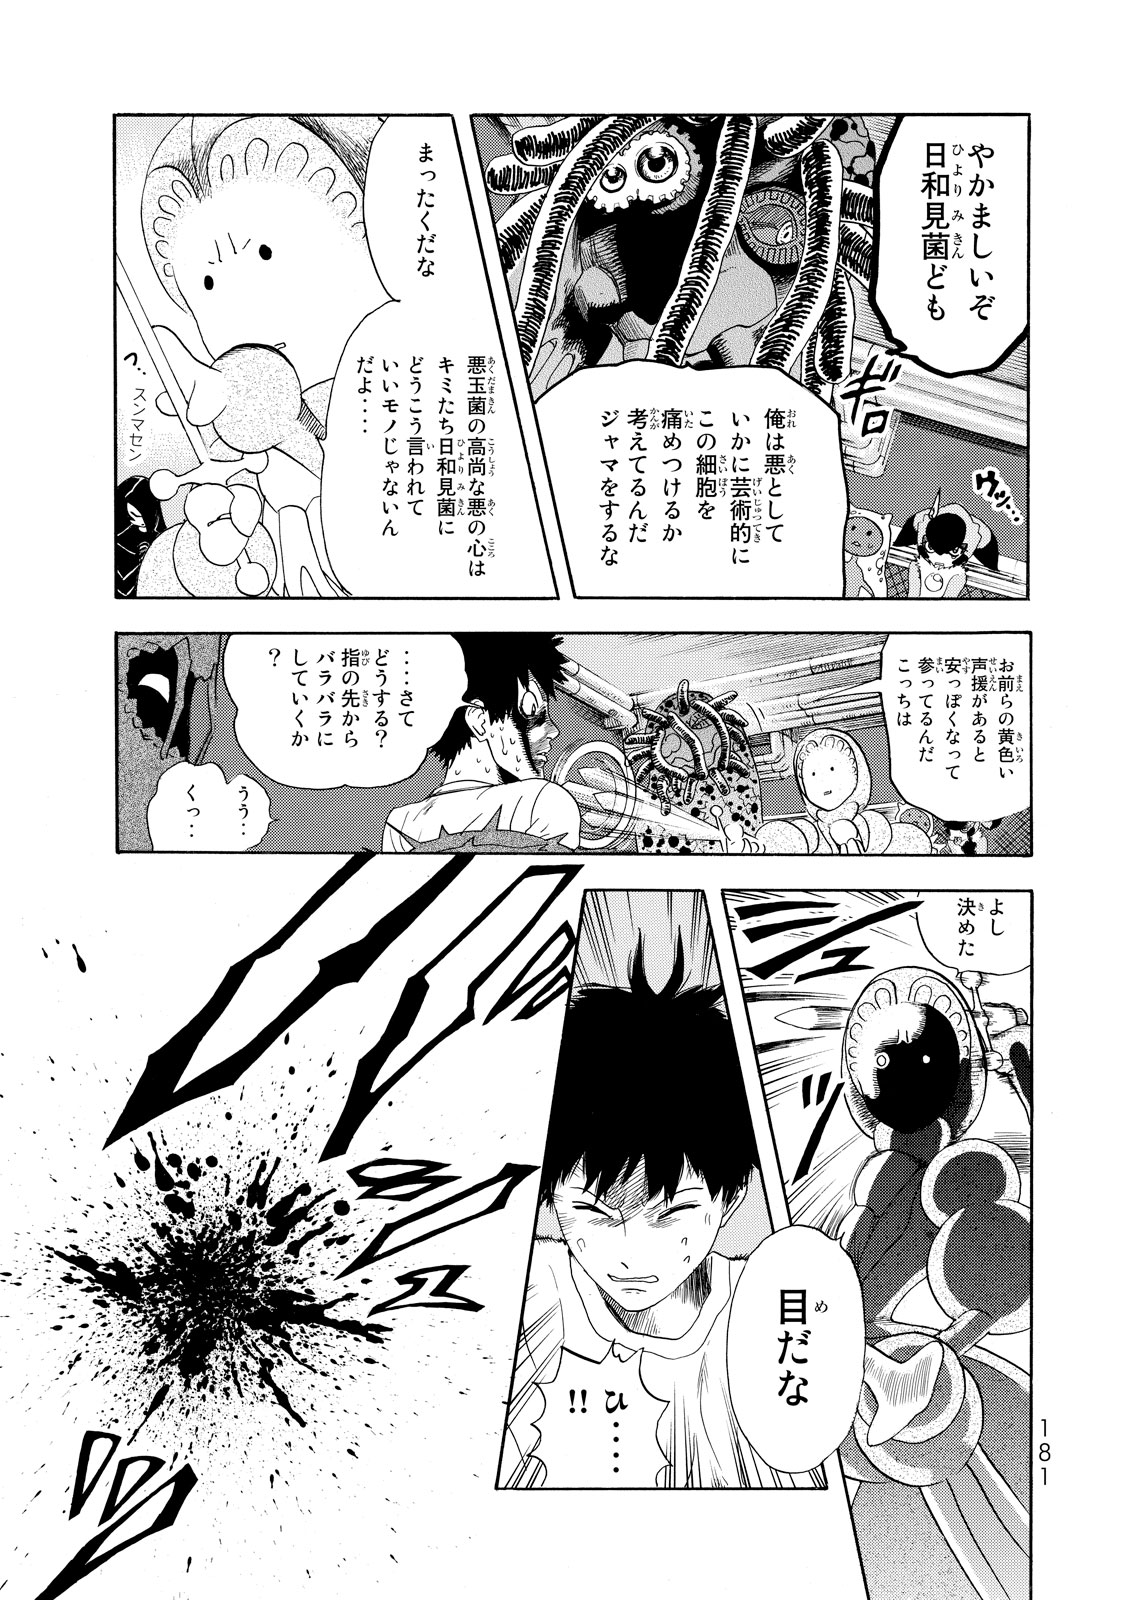 Hataraku Saibou - Chapter 25 - Page 7